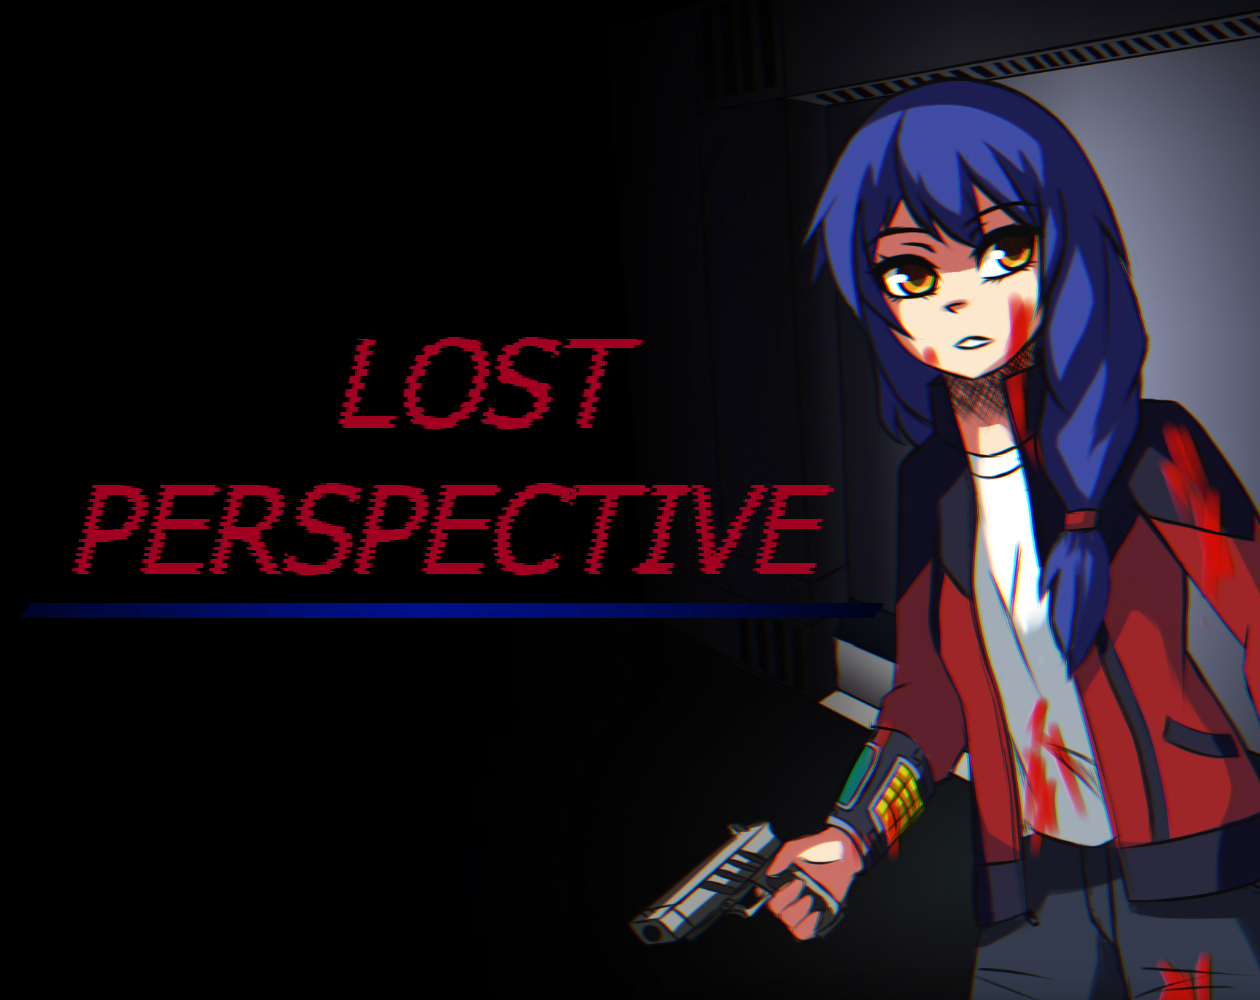 Lost Perspective by RoboAlpaca